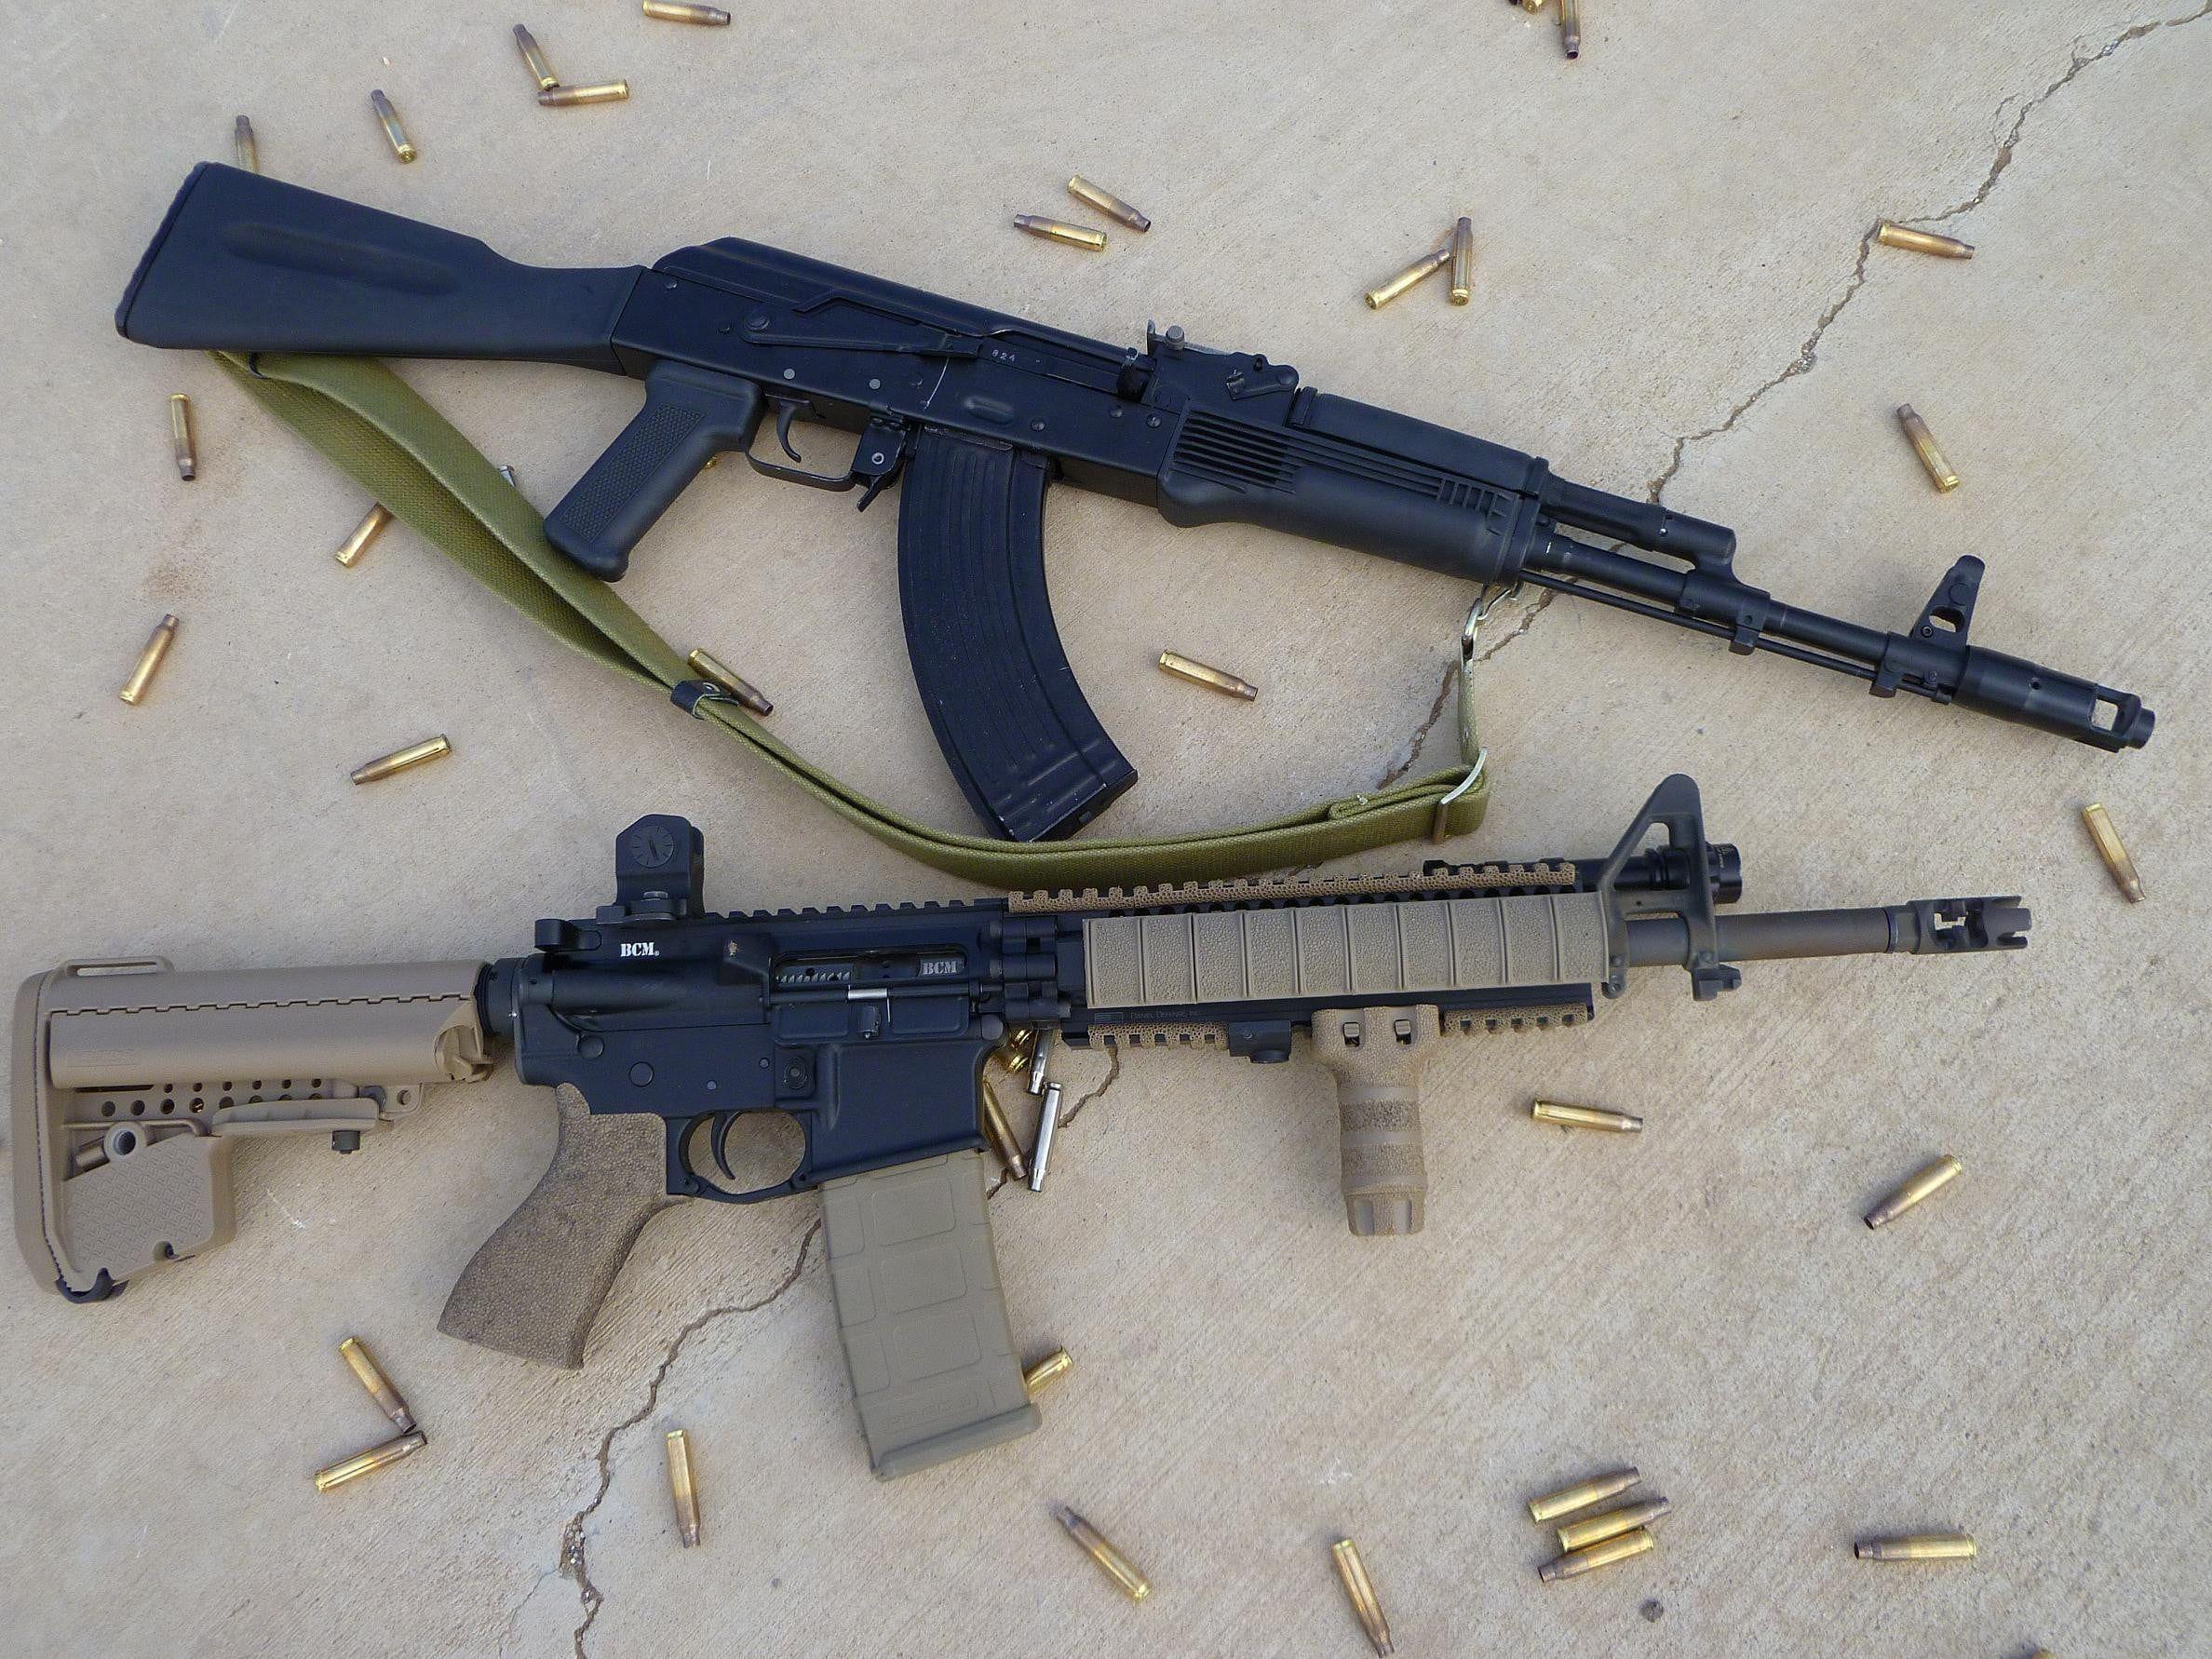 Two black Kalashnikov riffle and M4A1 rifle HD wallpaper. Wallpaper